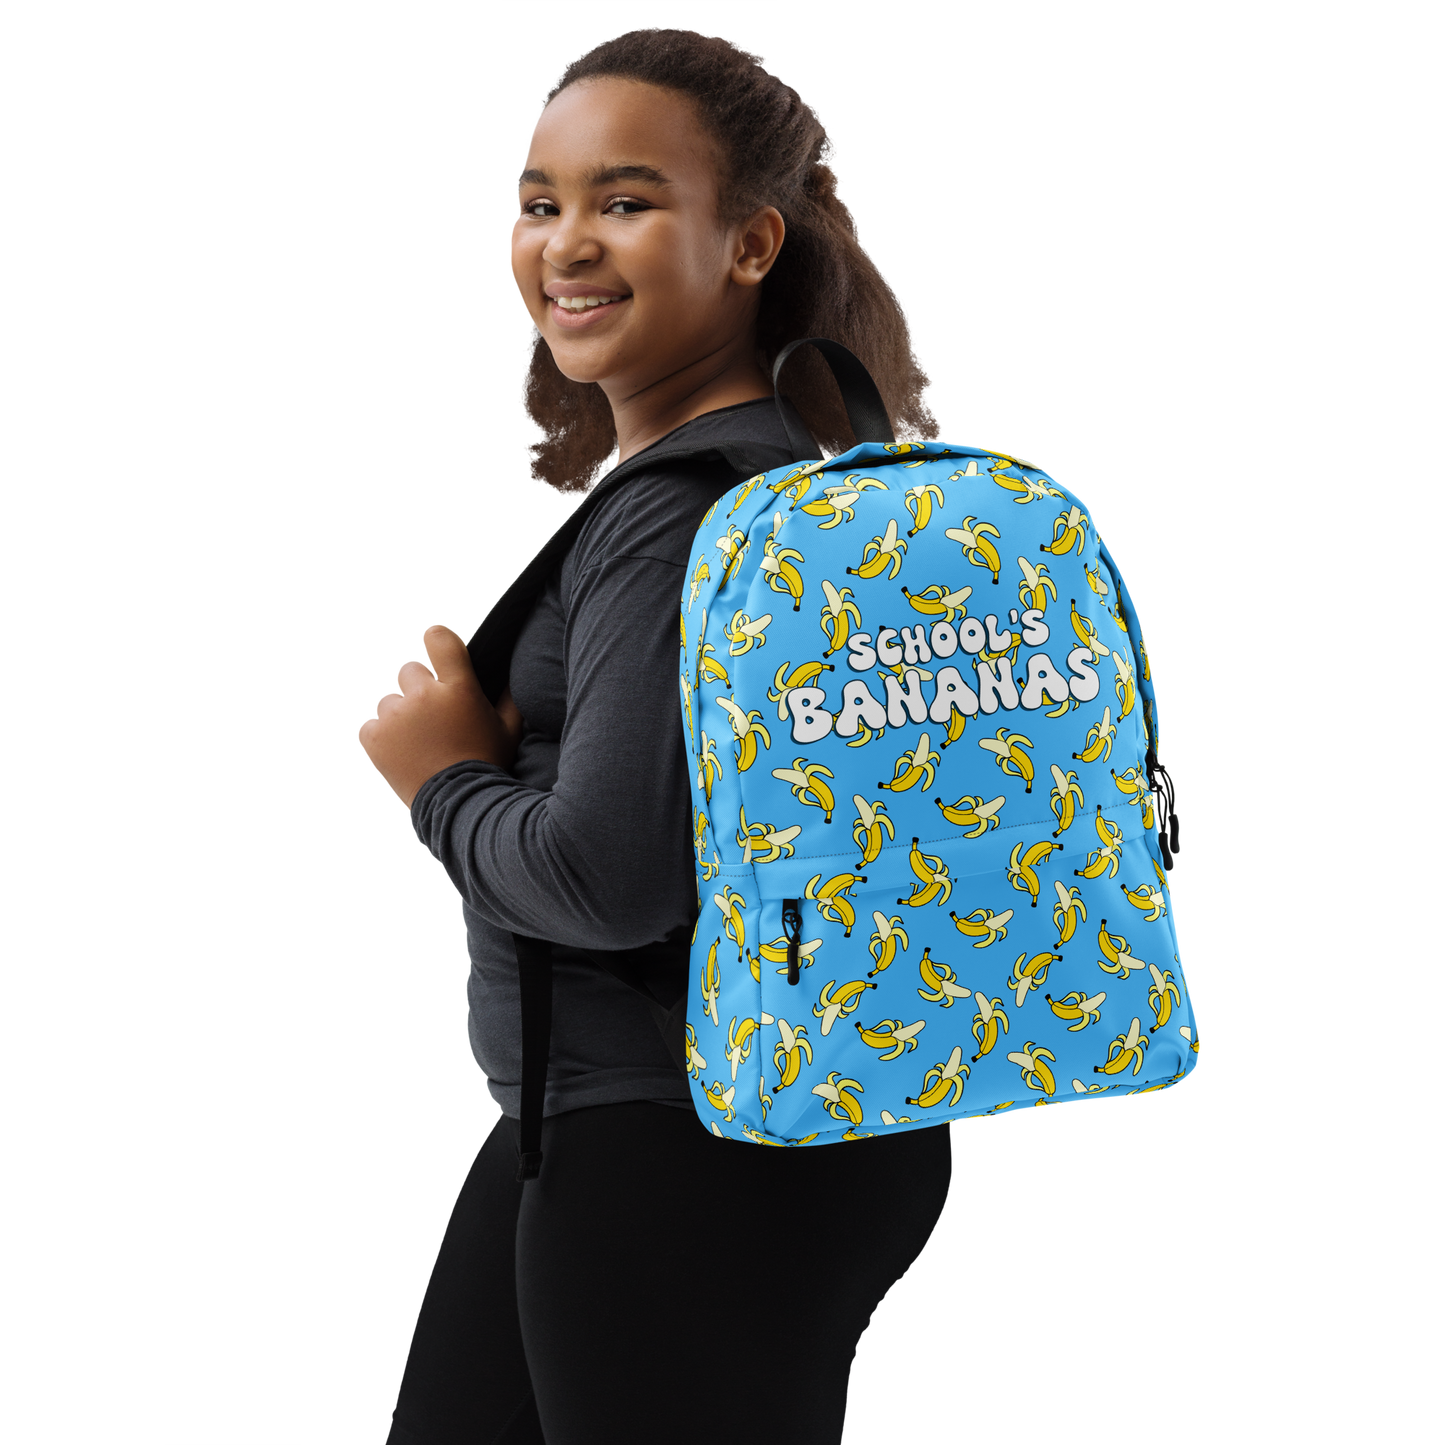 GU 'School's Banana's' Backpack